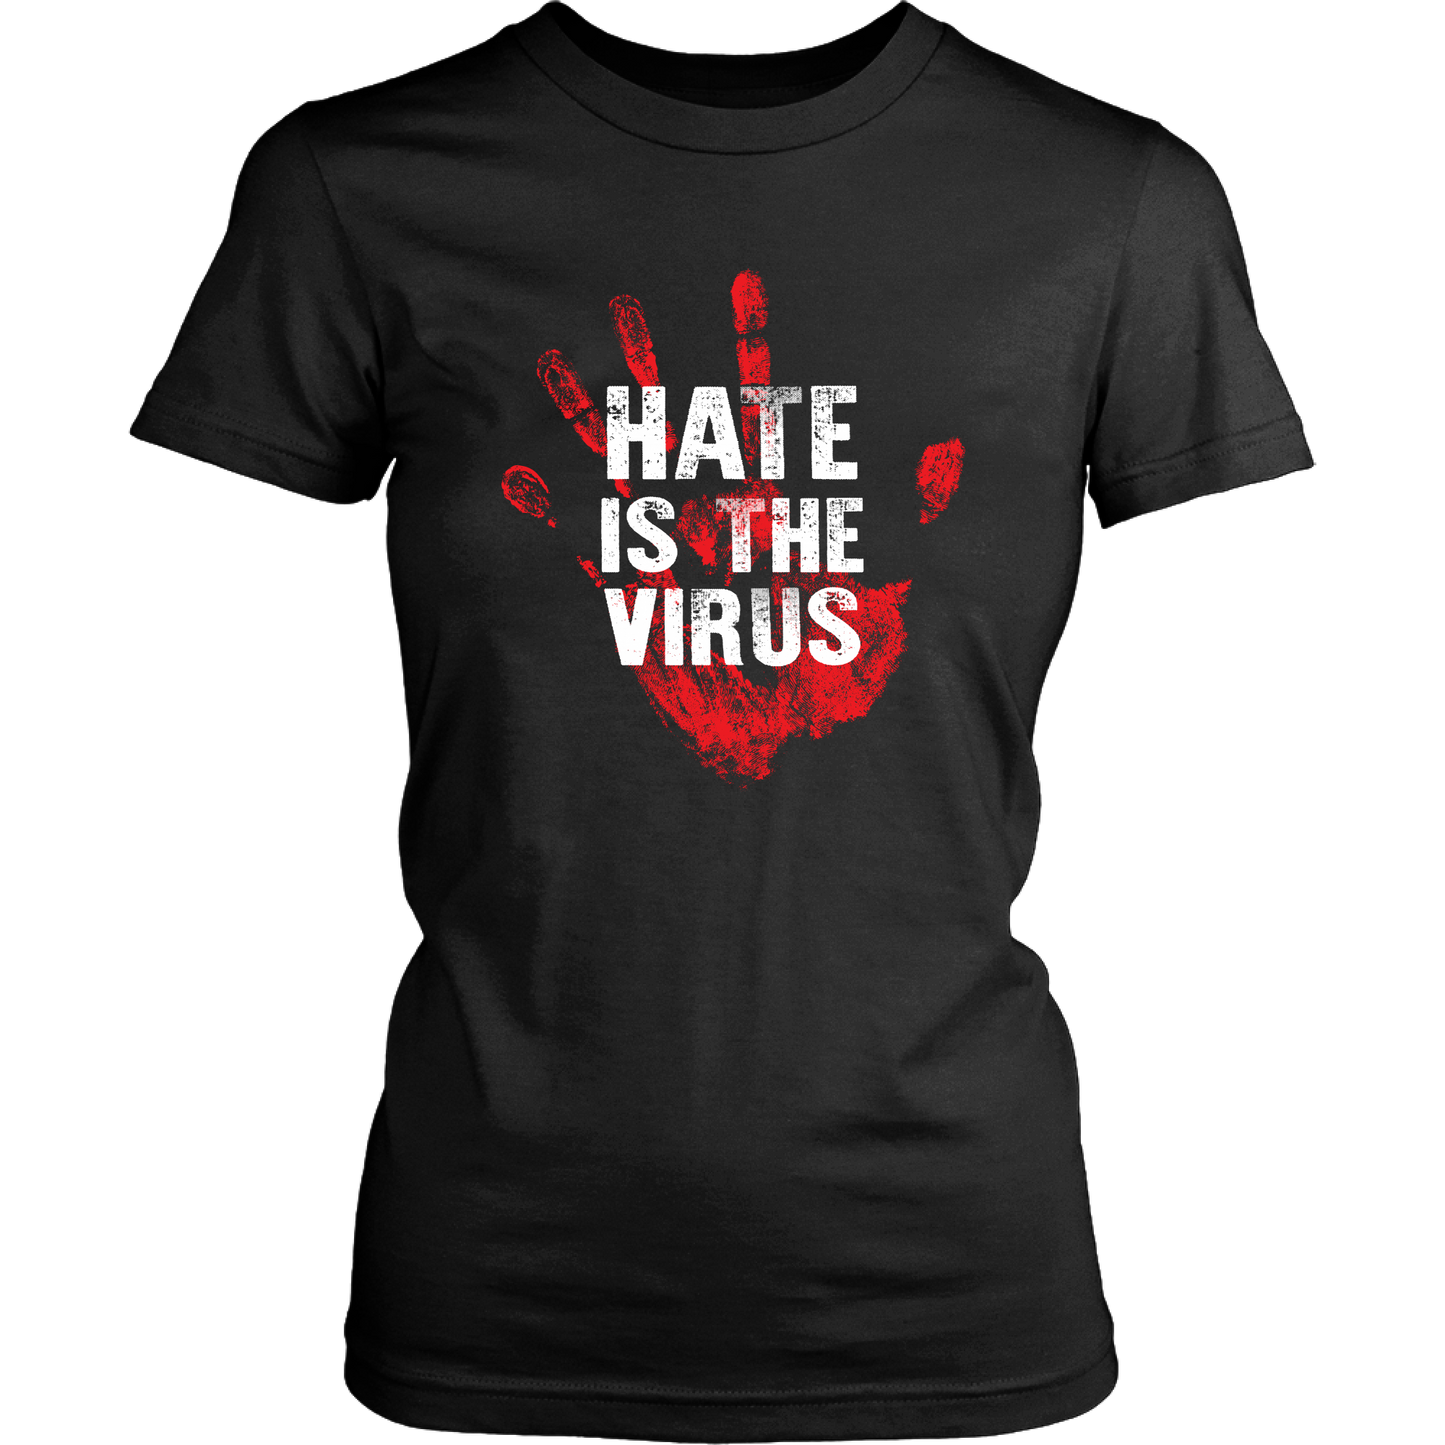 HATE IS THE VIRUS COMBO TSHIRTS